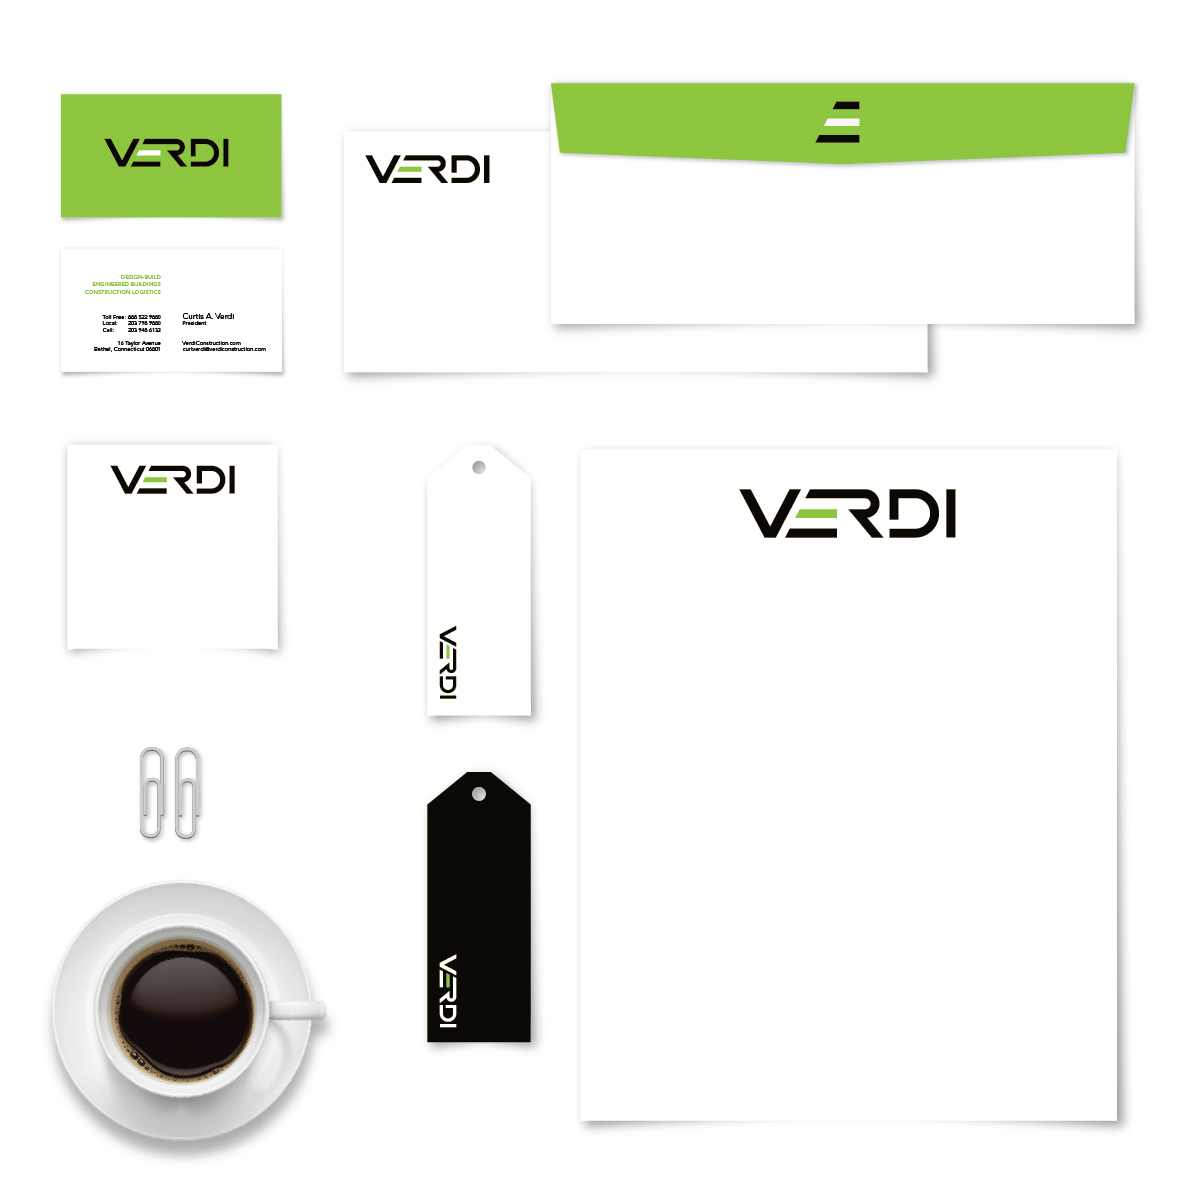 verdi-construction-logo stationary design bethel ct